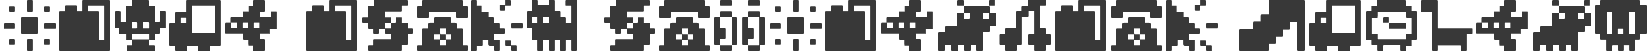 pixel-icons-compilation Regular